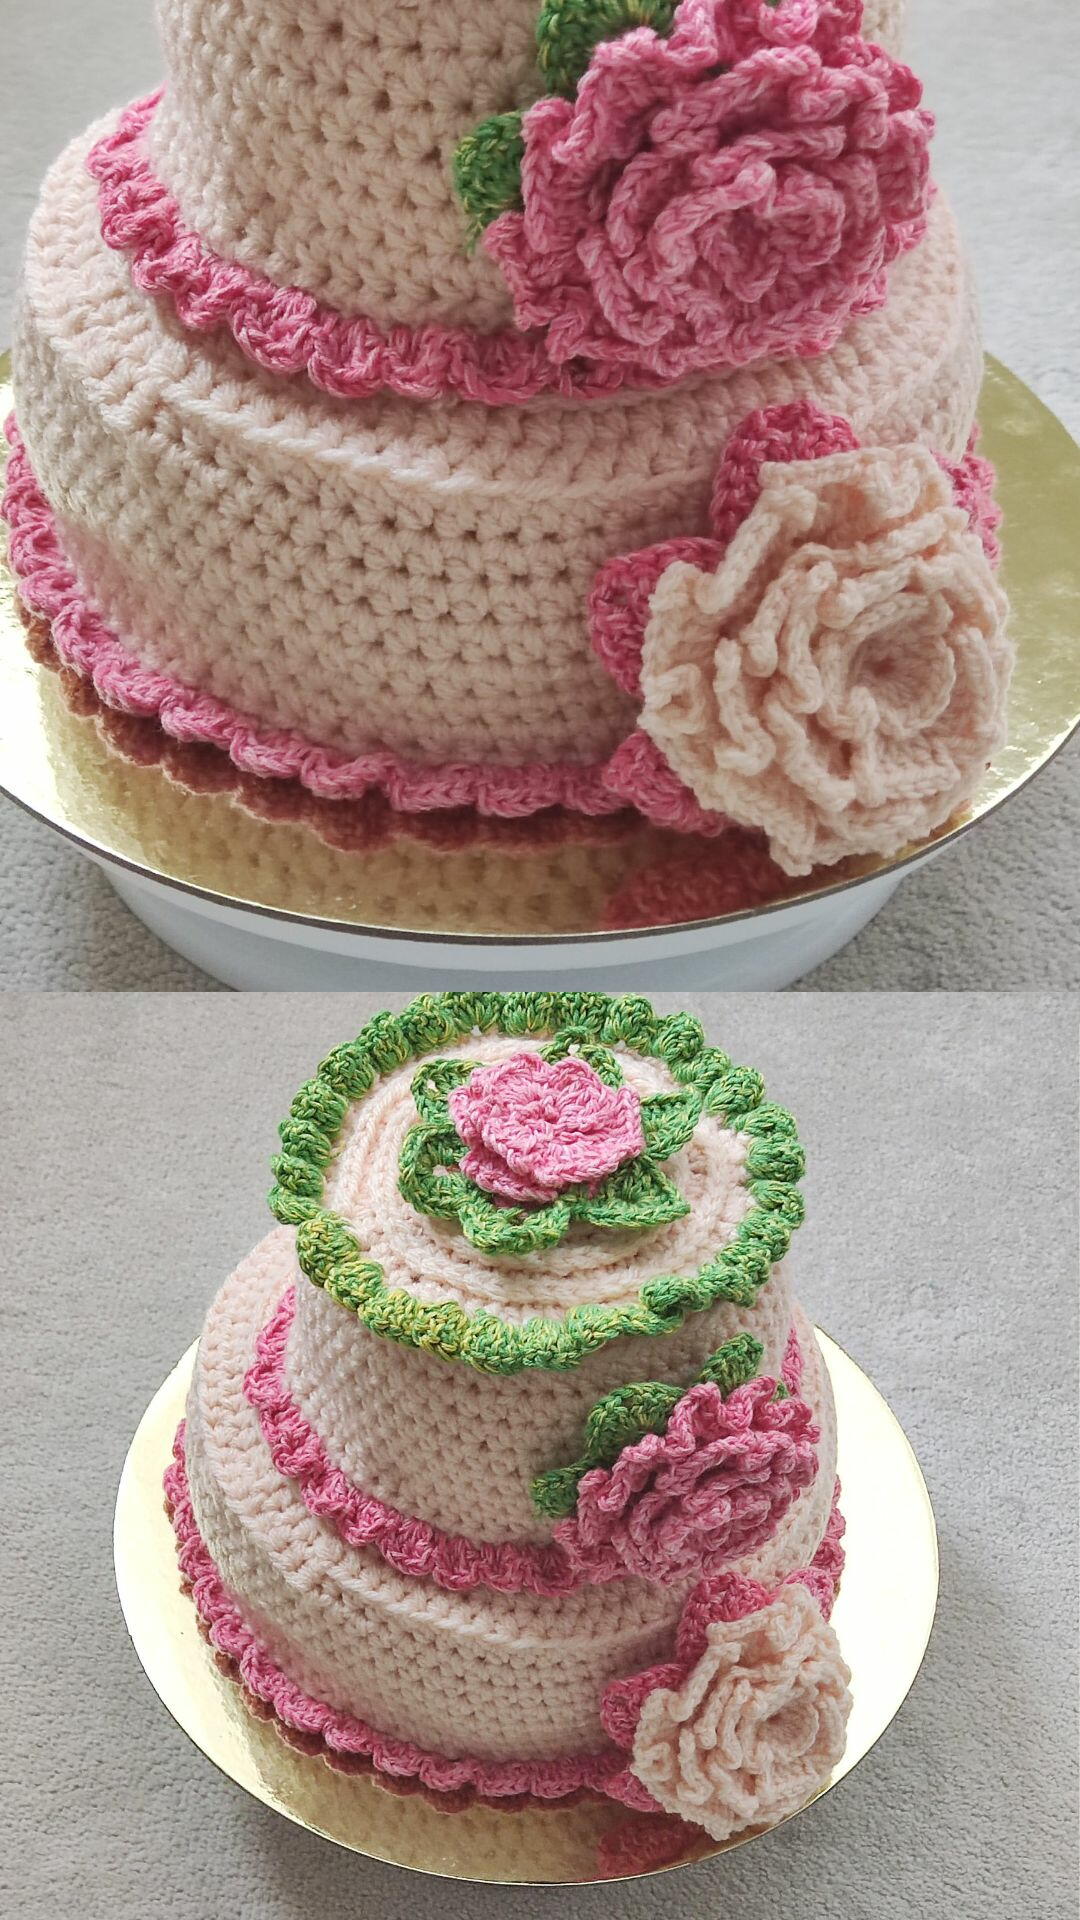 25+ Best Image of Crochet Birthday Cake - birijus.com | Themed cakes,  Knitting cake, Themed birthday cakes